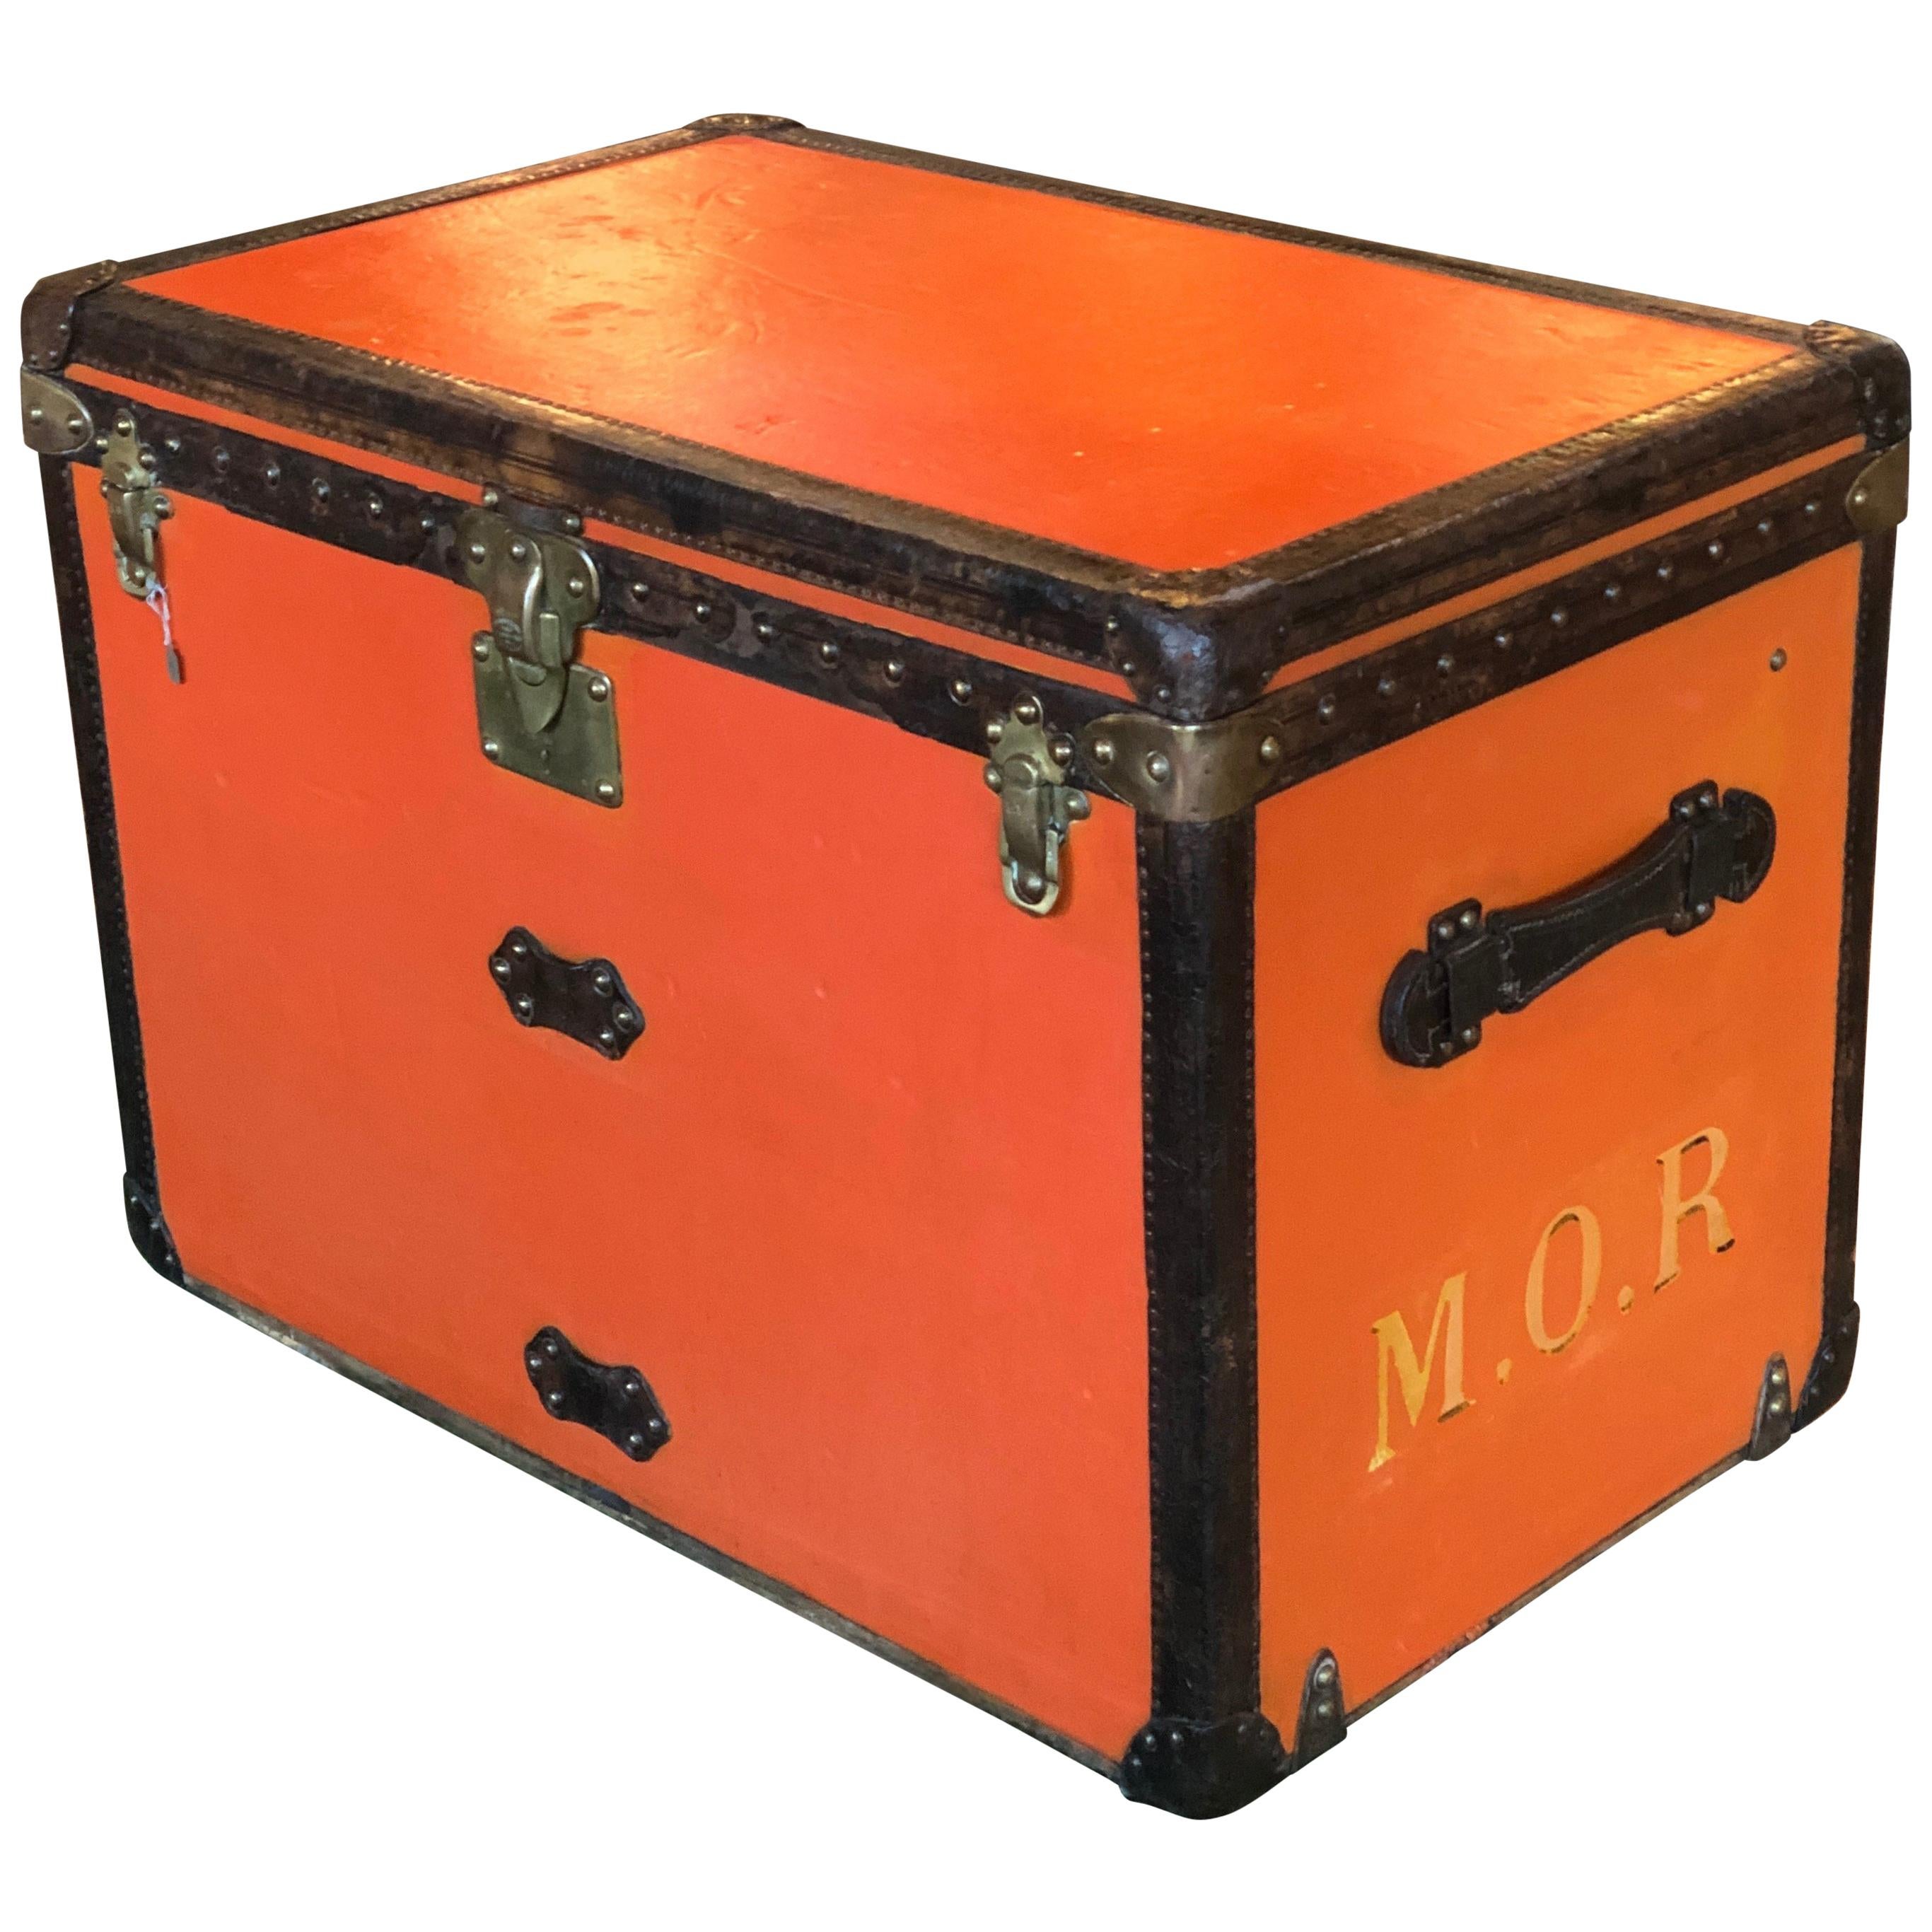 Rare Louis Vuitton Orange Trunk with Initials M.O.R, circa 1930s